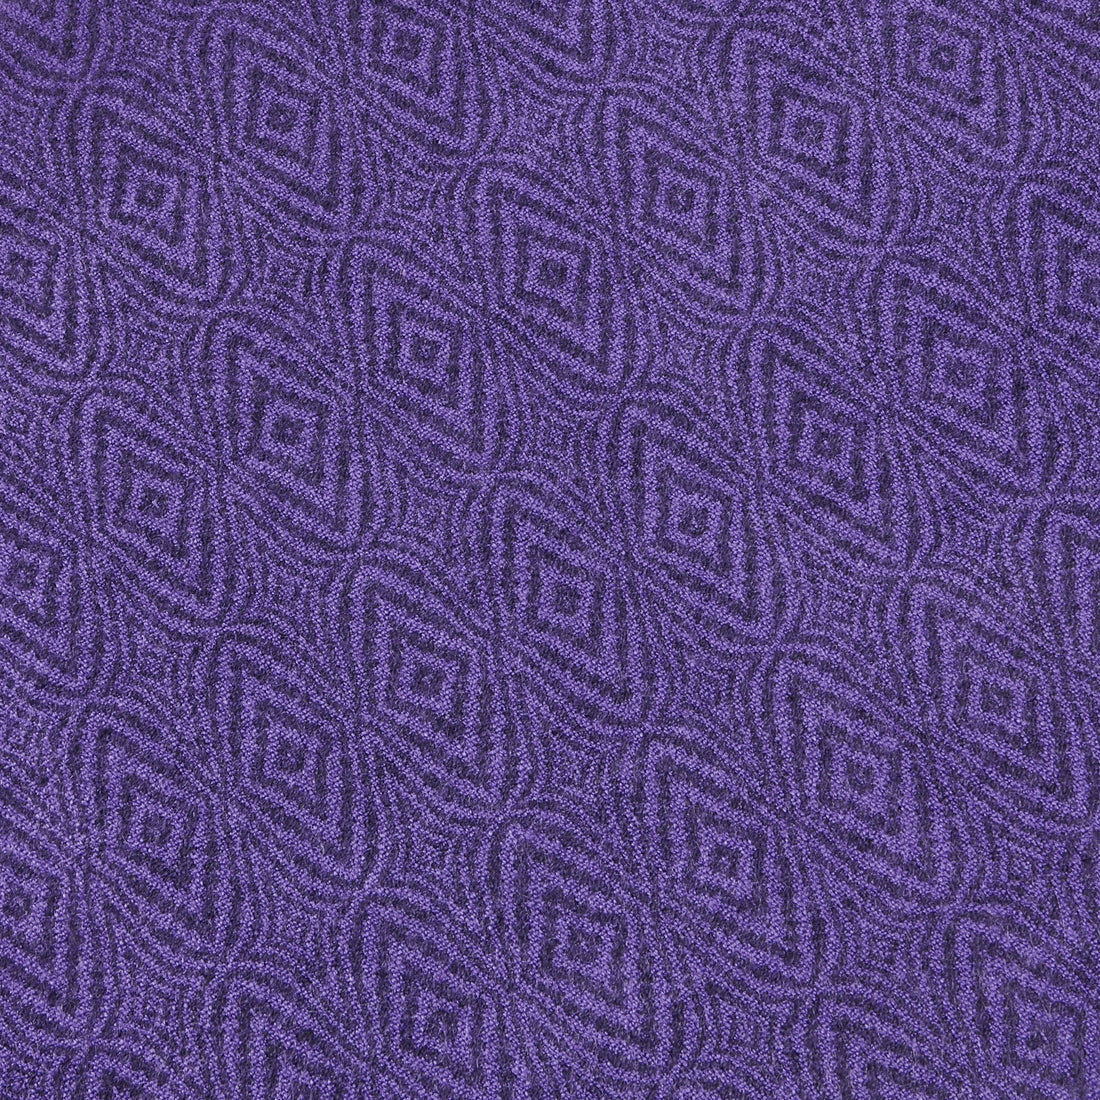 Purple Infinity Scarf - FINAL SALE